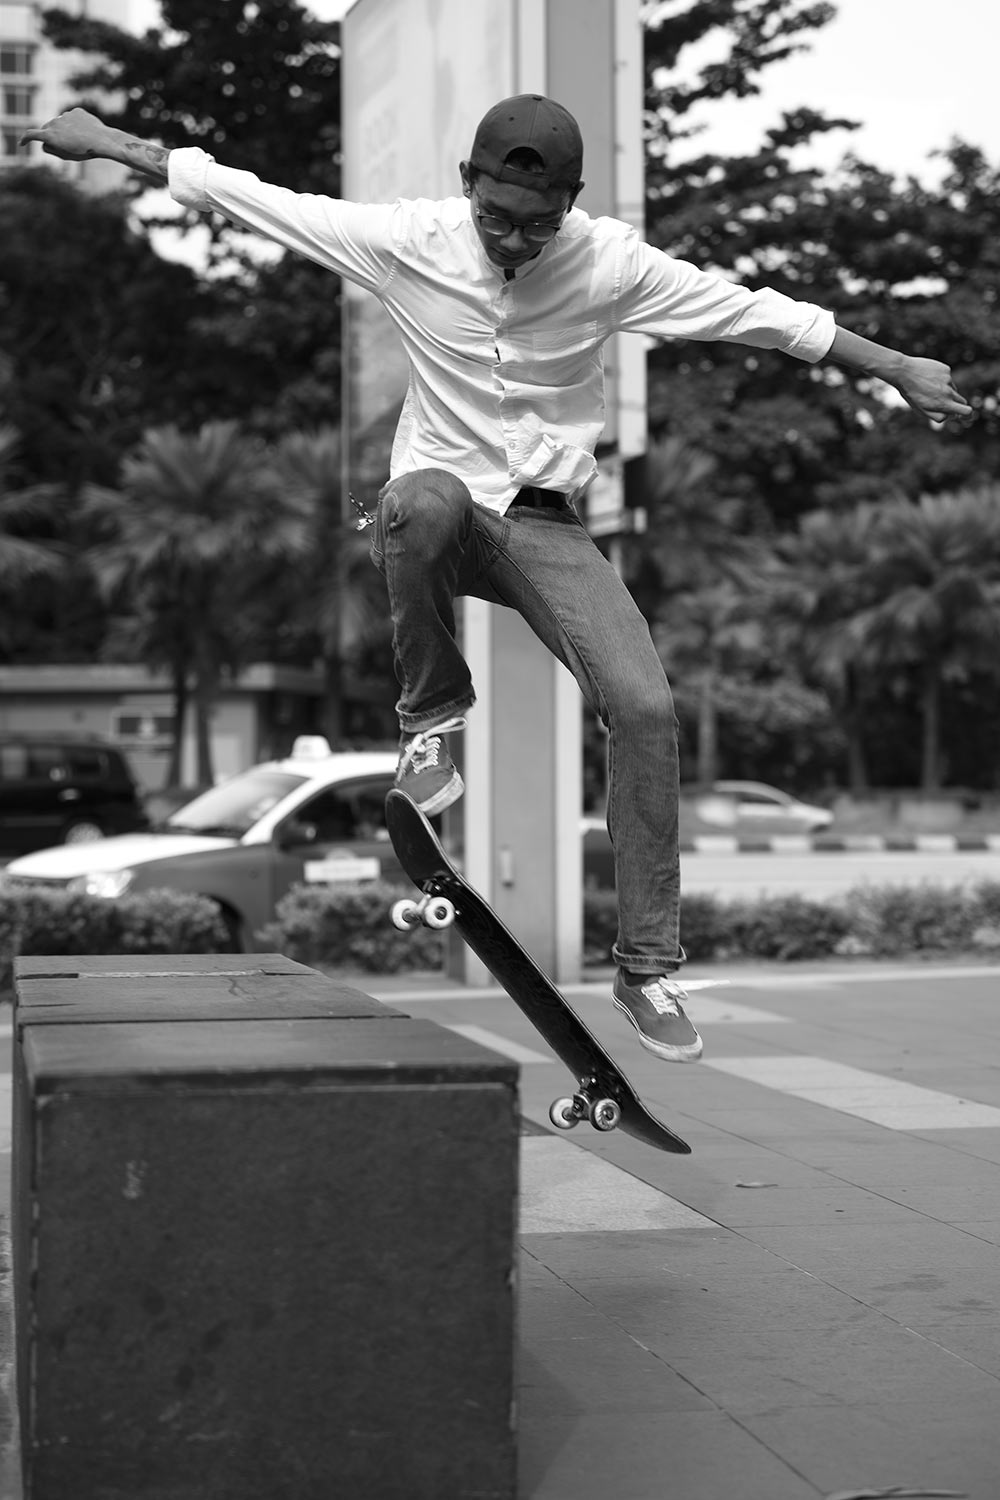 Aiman skateboarding Ampang LRT Station.